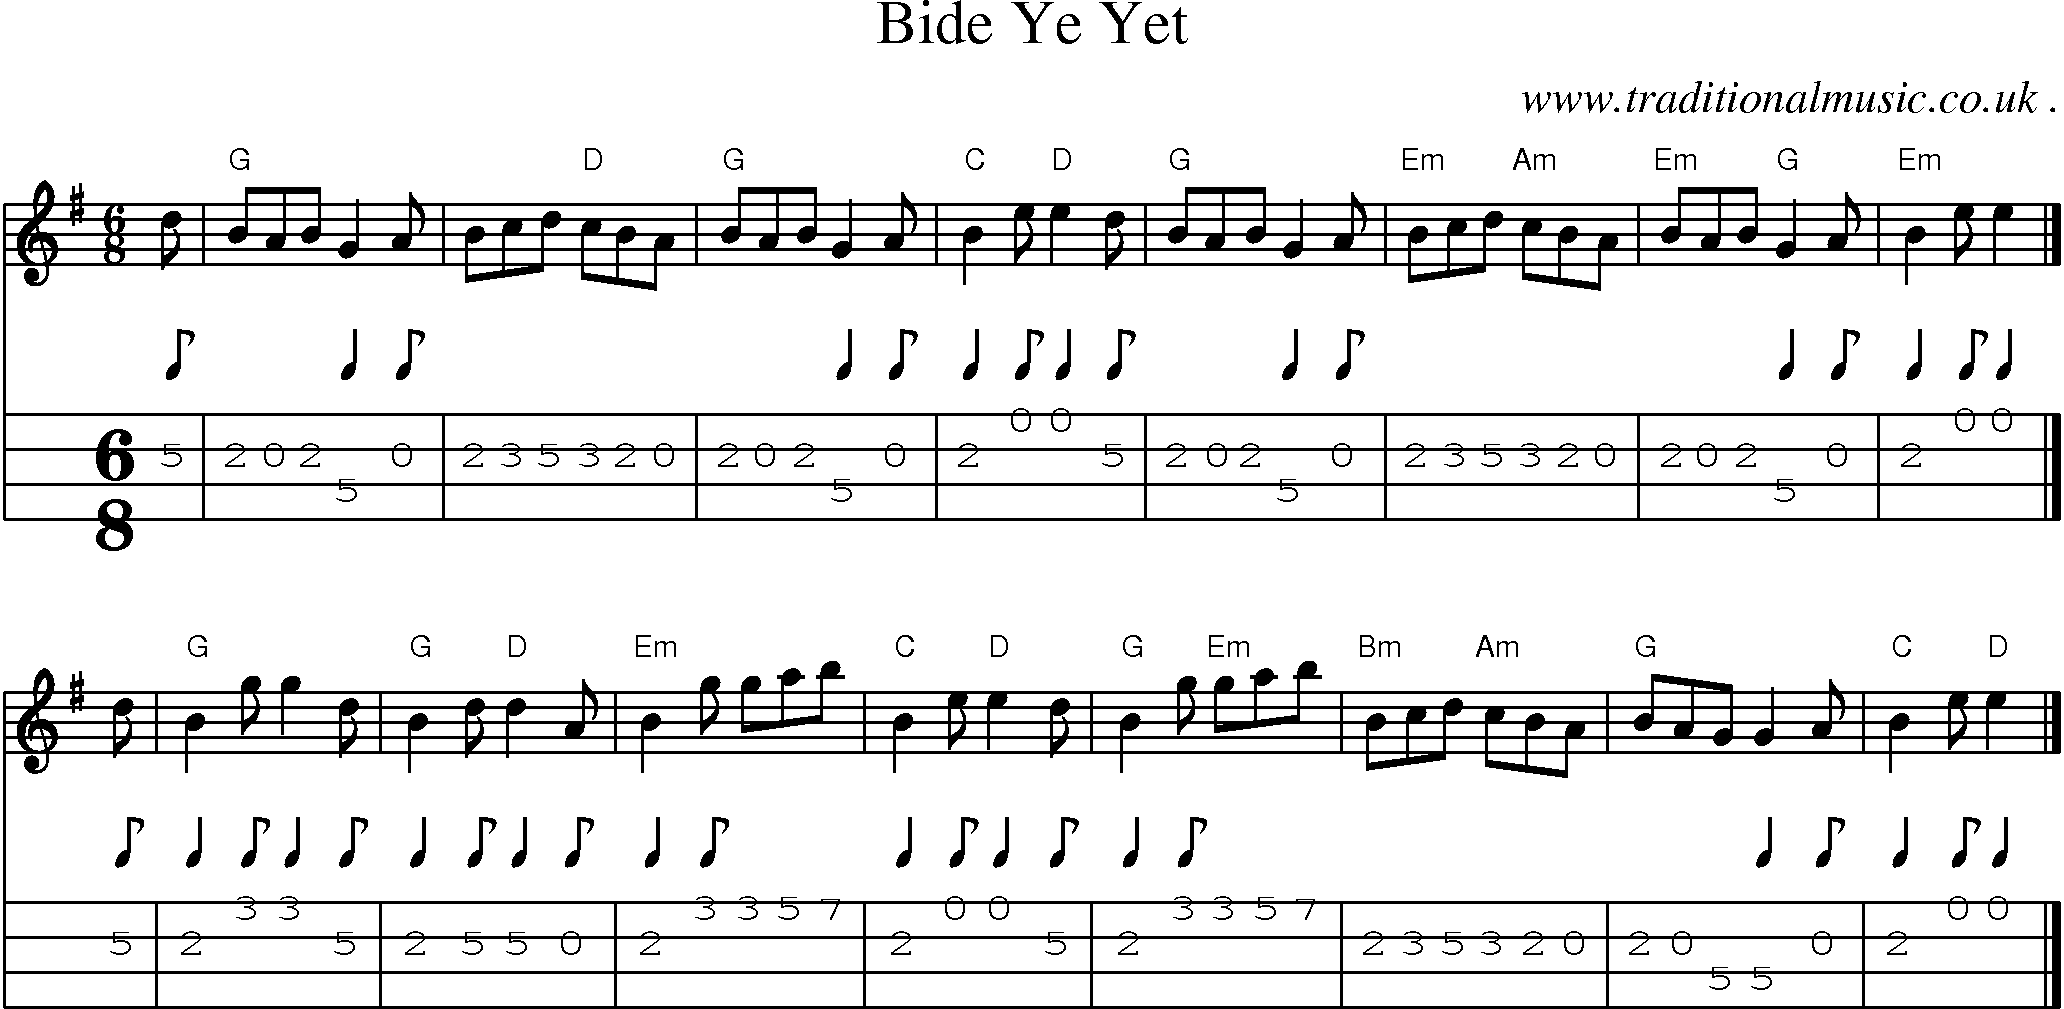 Sheet-music  score, Chords and Mandolin Tabs for Bide Ye Yet